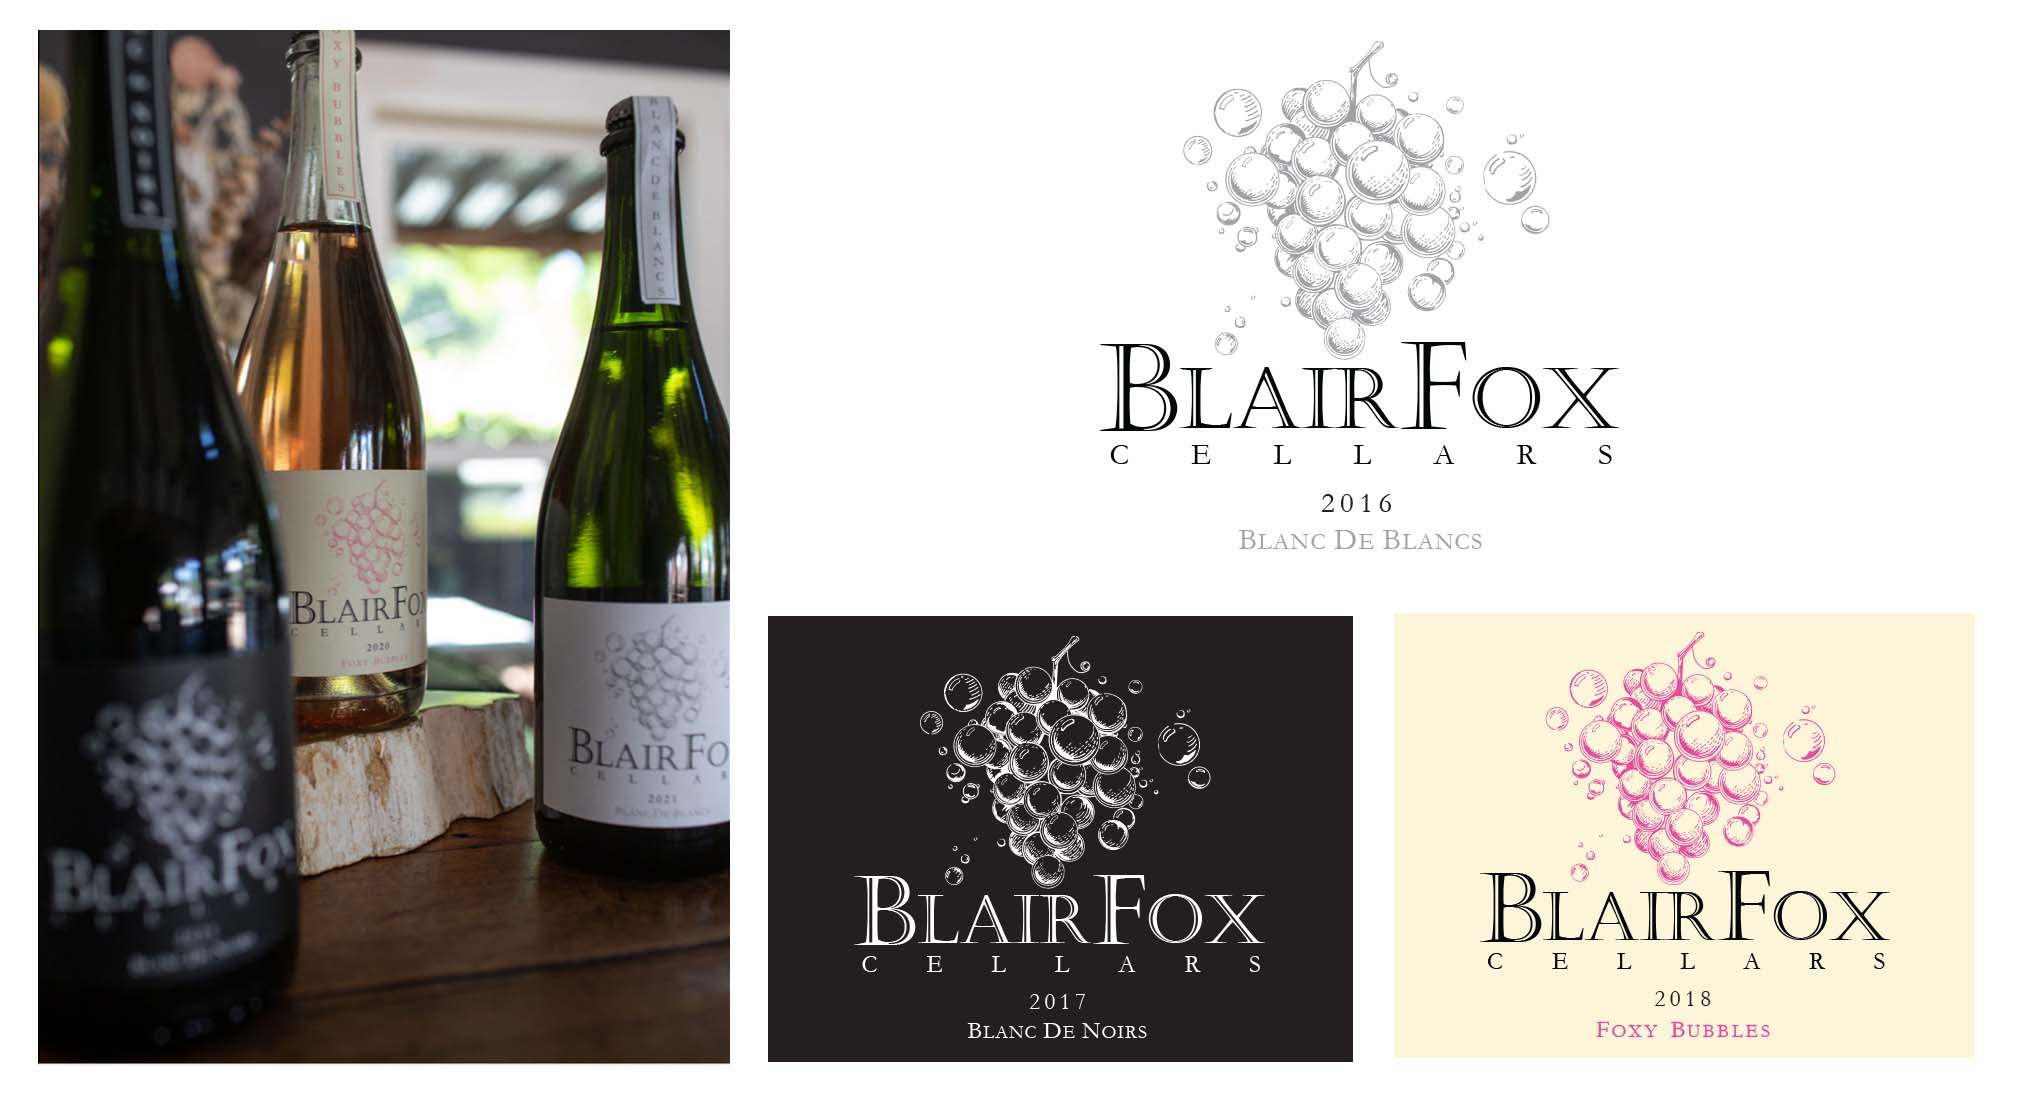 Blair Fox Cellars wine label designs blanc du blanc and blanc du noirs